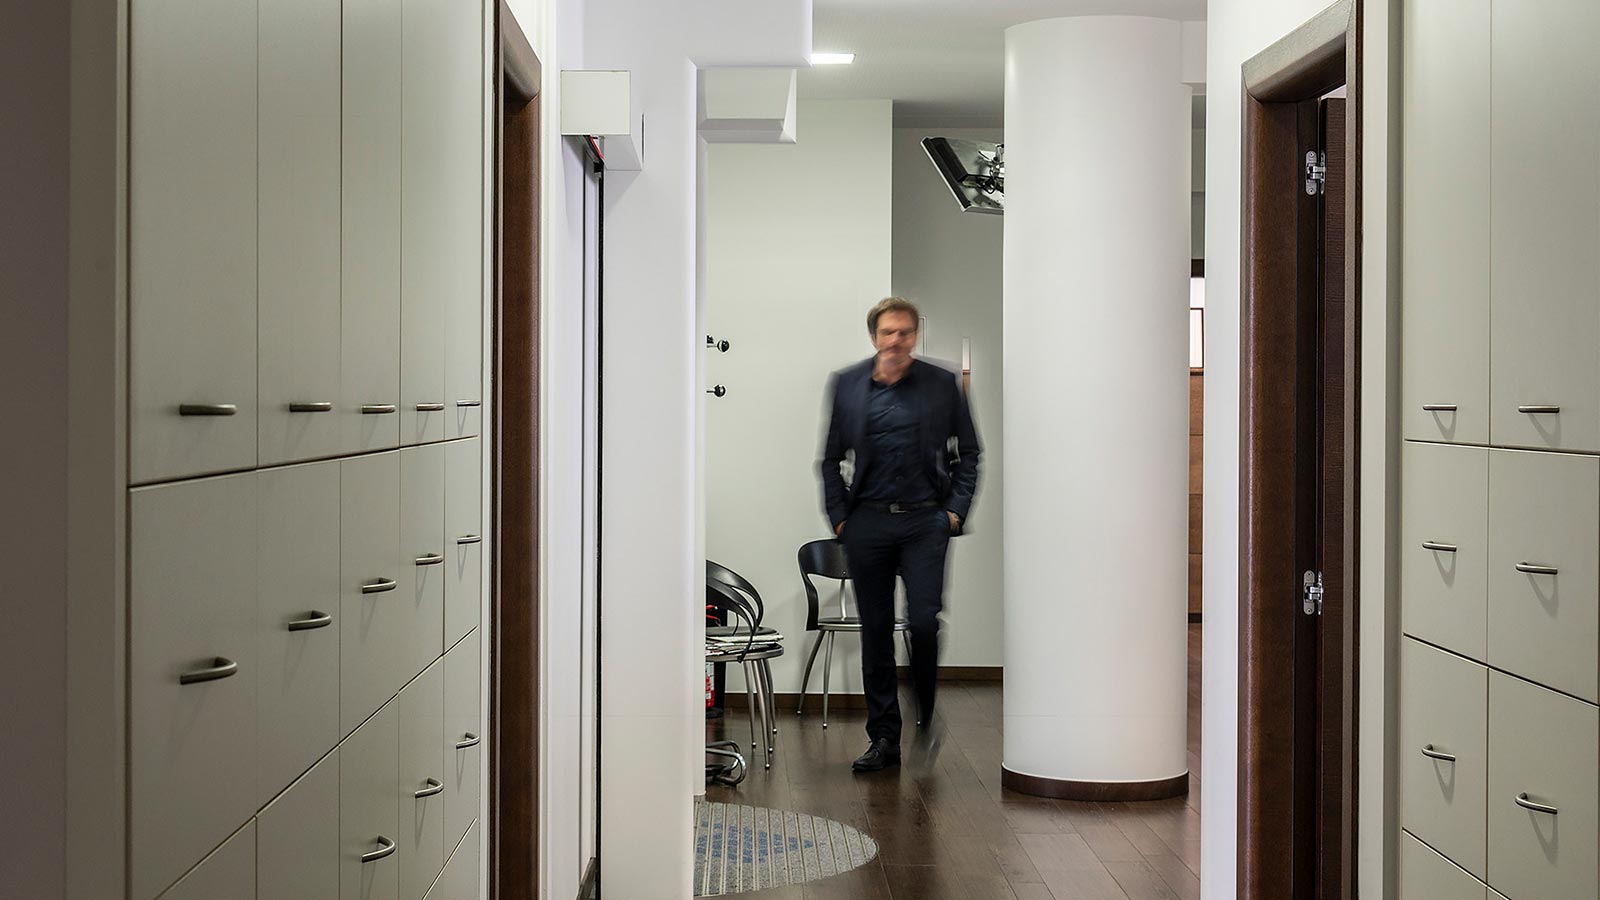 One of the tax consultants walks through the hallways of Studio Onepau in Bolzano